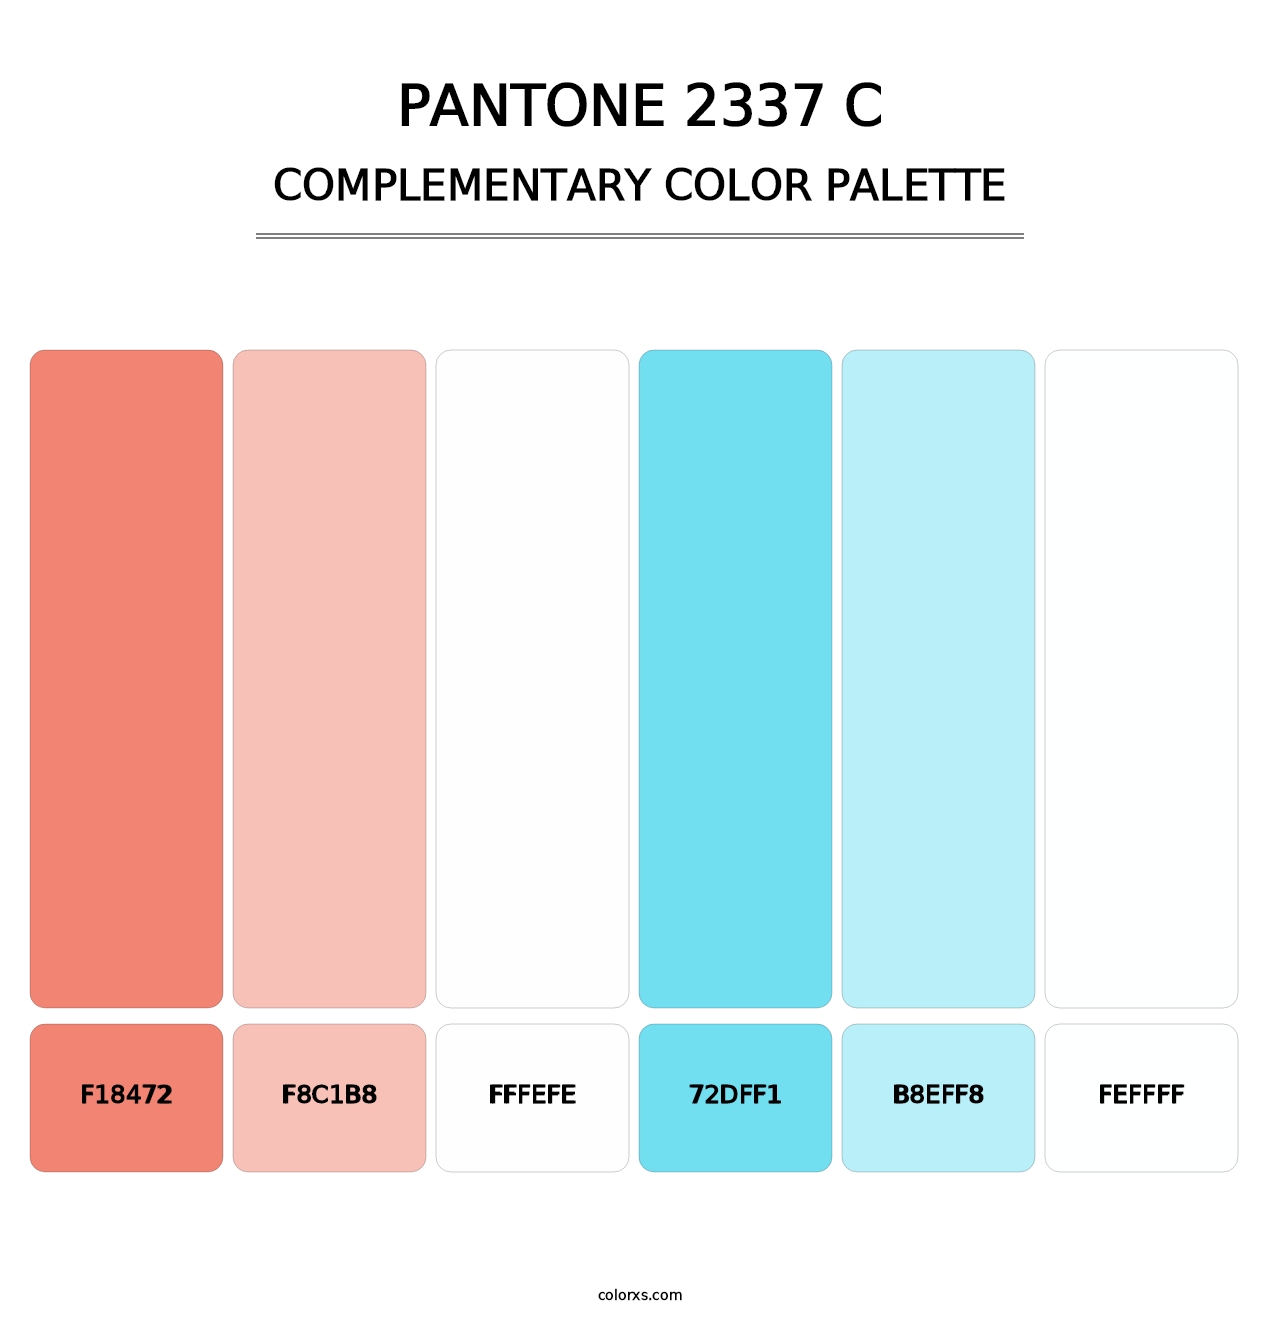 PANTONE 2337 C - Complementary Color Palette